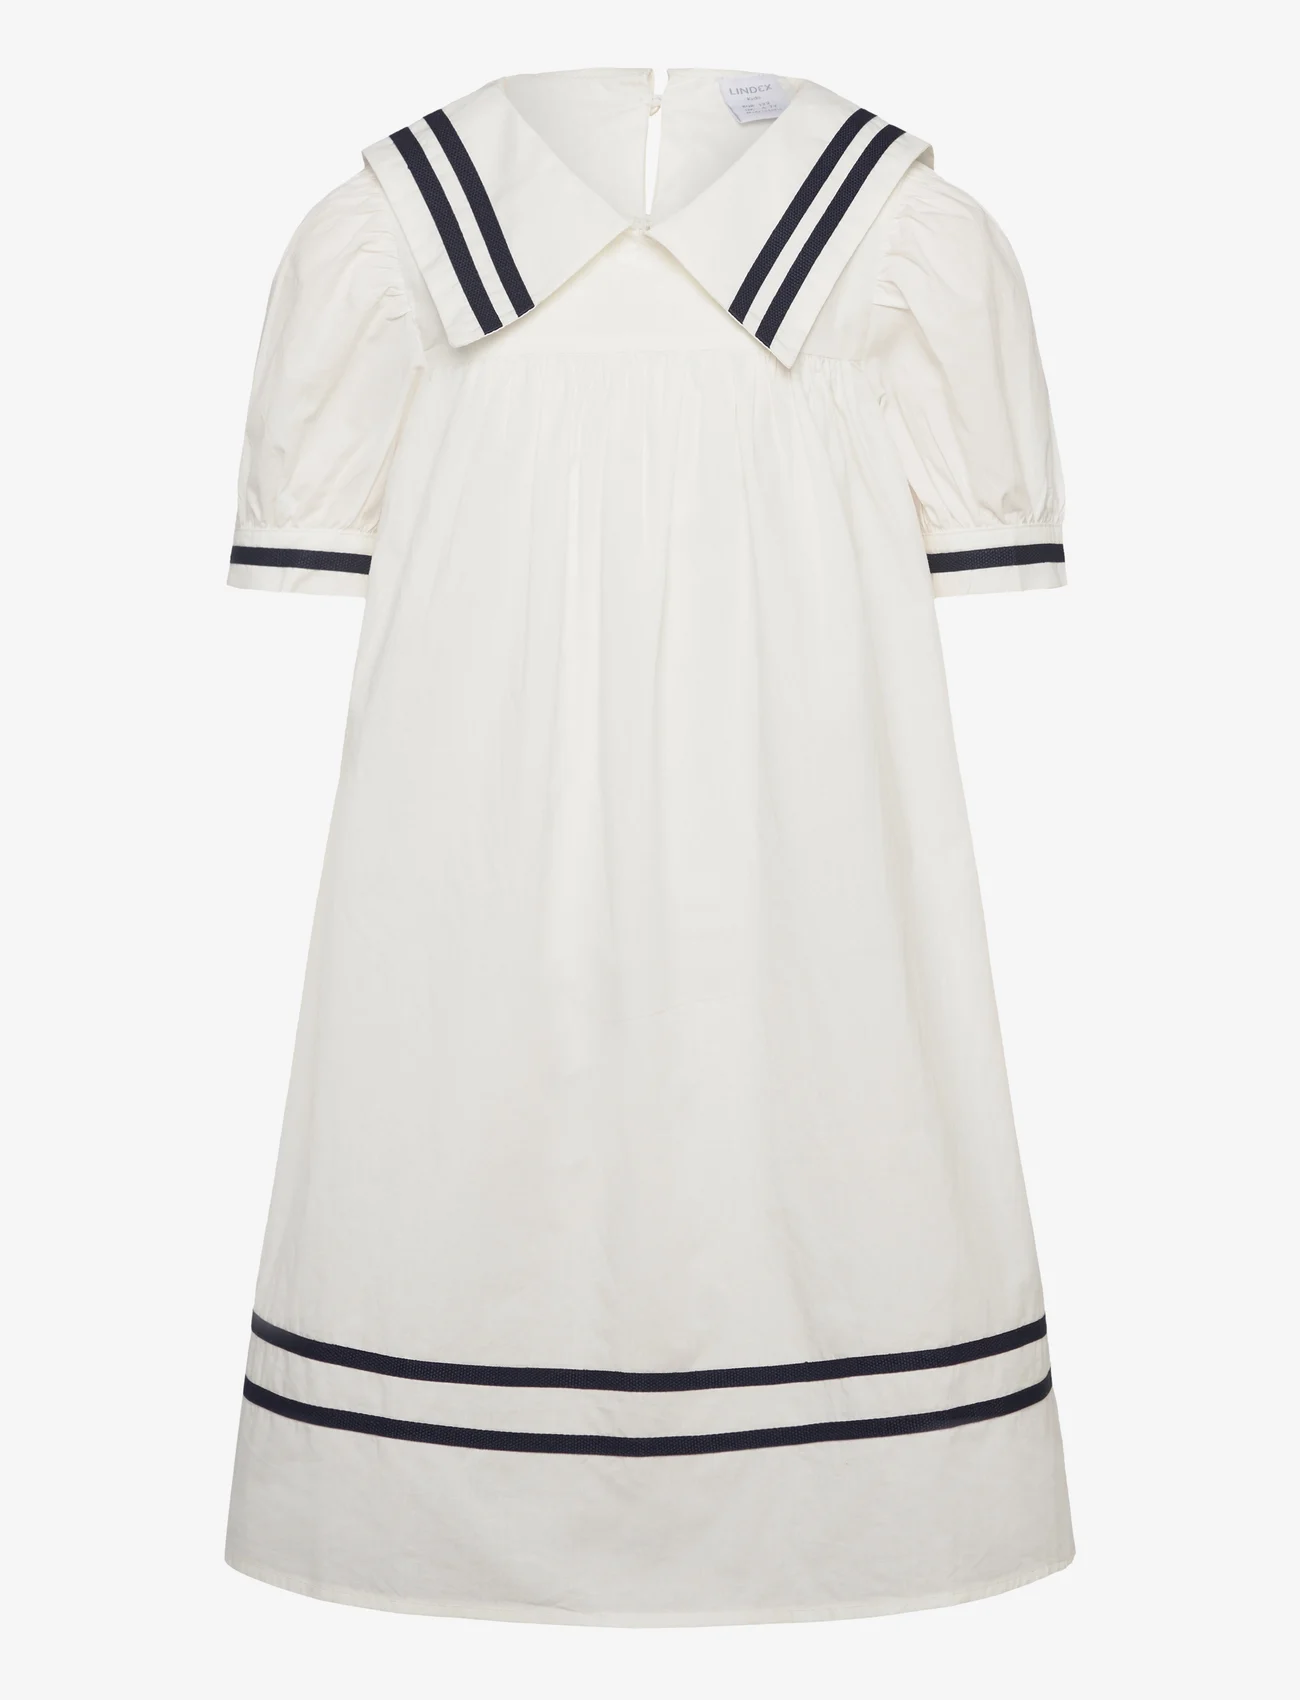 Lindex - Dress sailor ss - short-sleeved casual dresses - light dusty white - 1